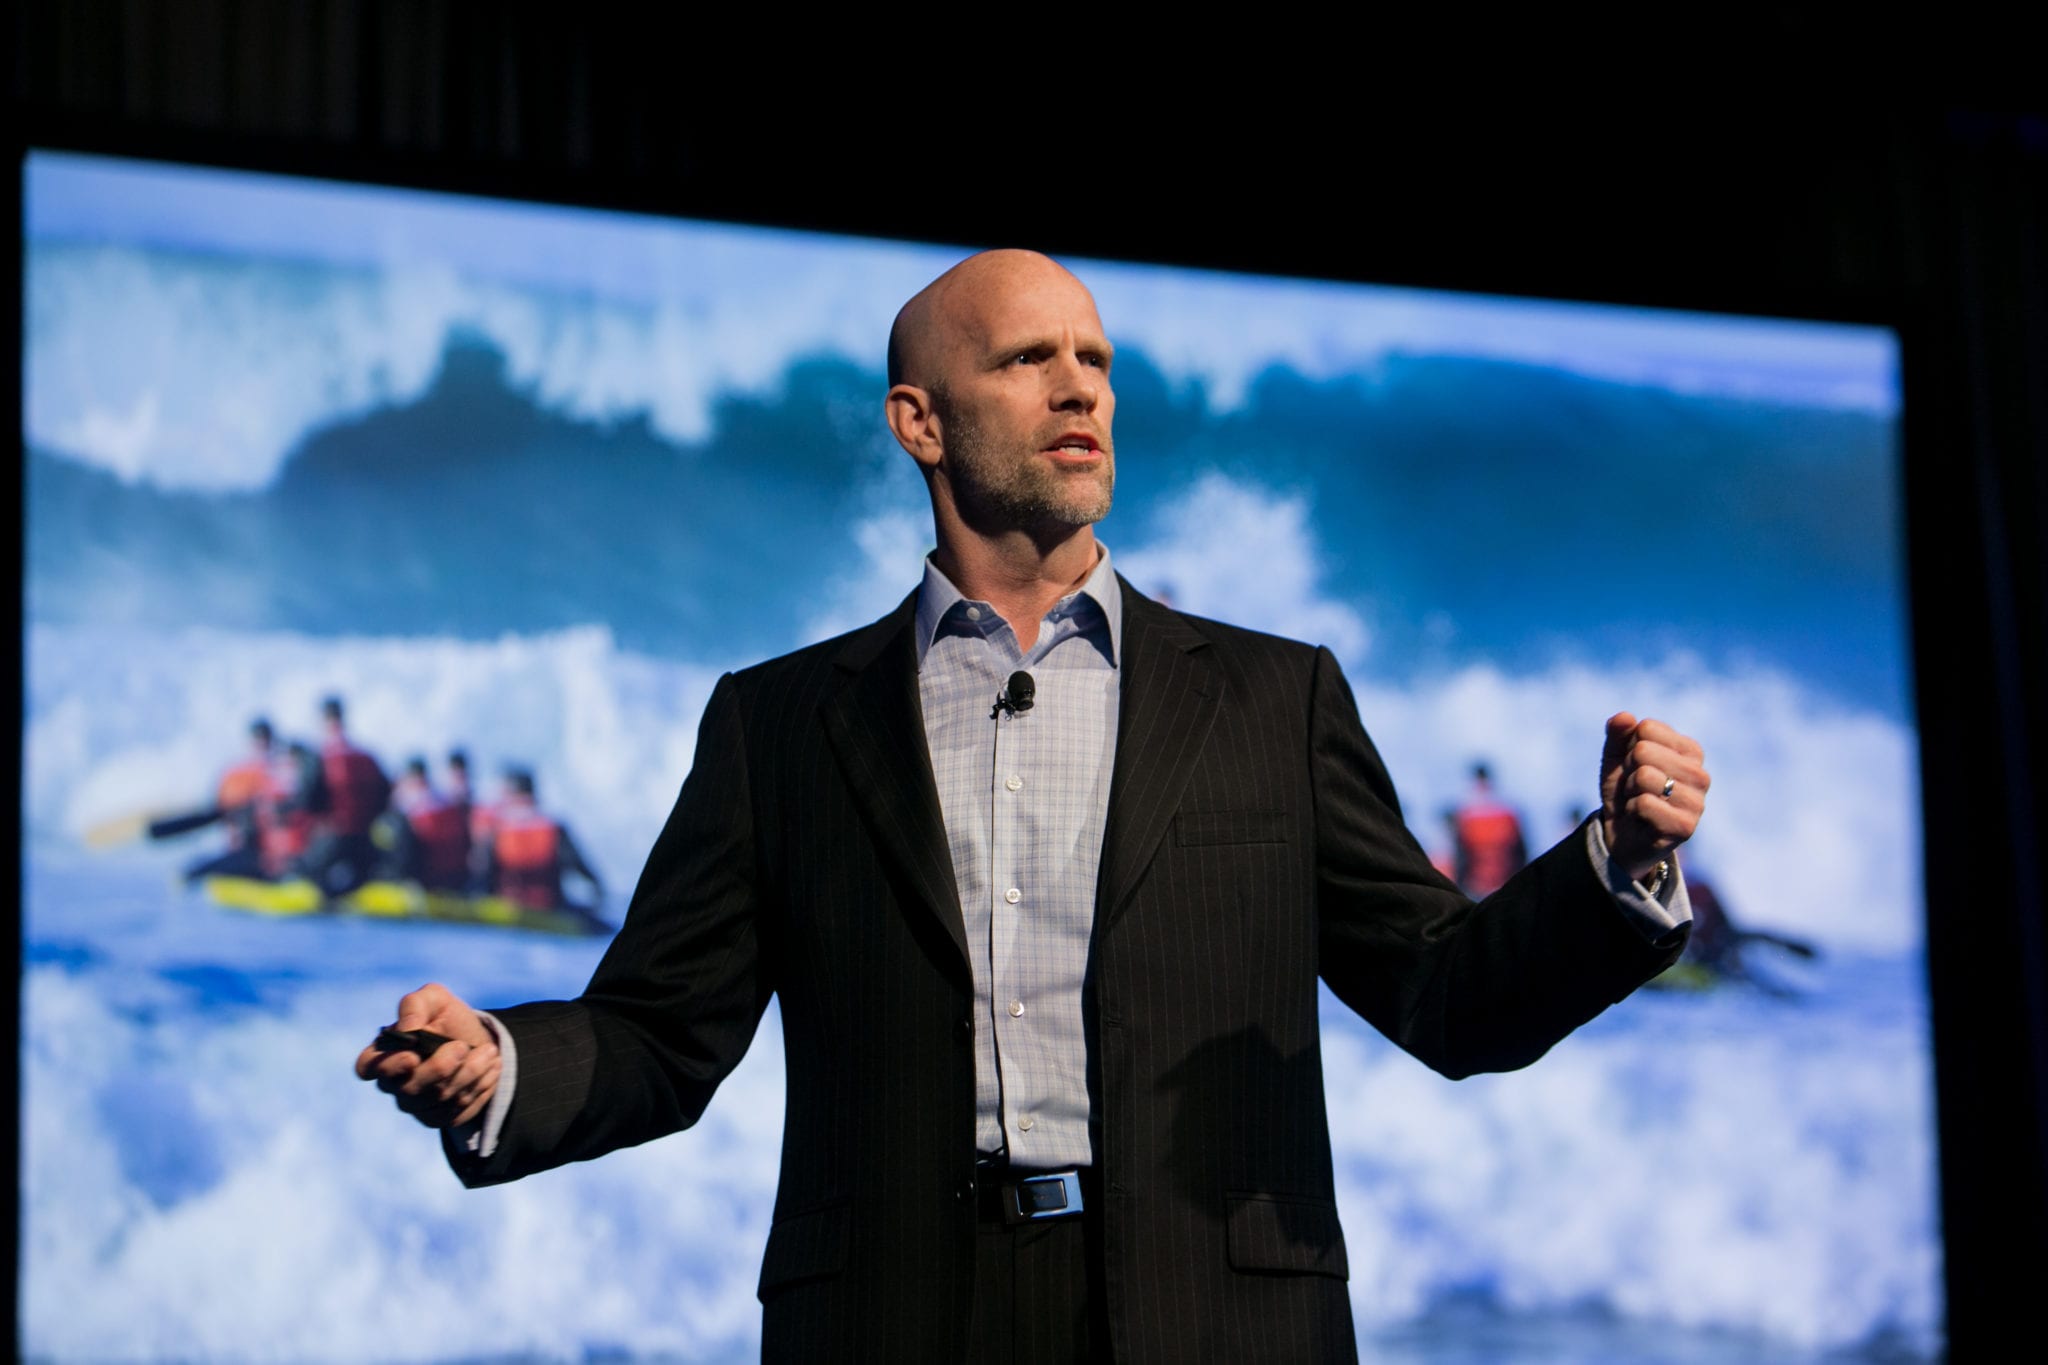 Navy SEAL Leadership Expert Errol Doebler standing on stage in front of screen showing people white water rafting